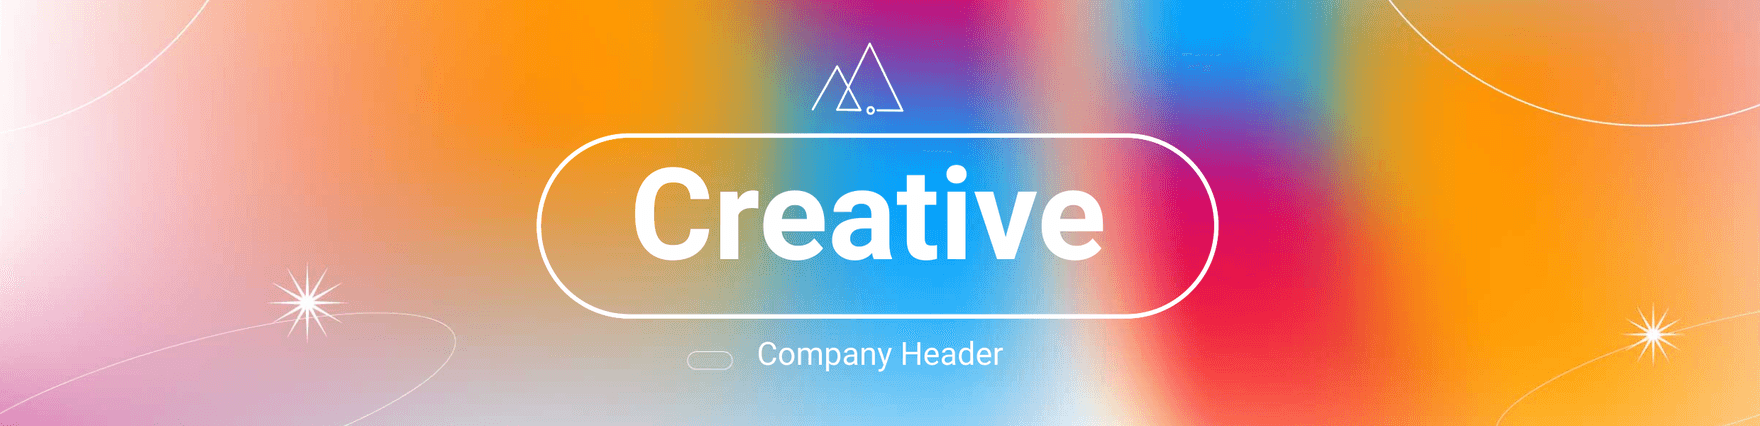 Creative Company Header Template